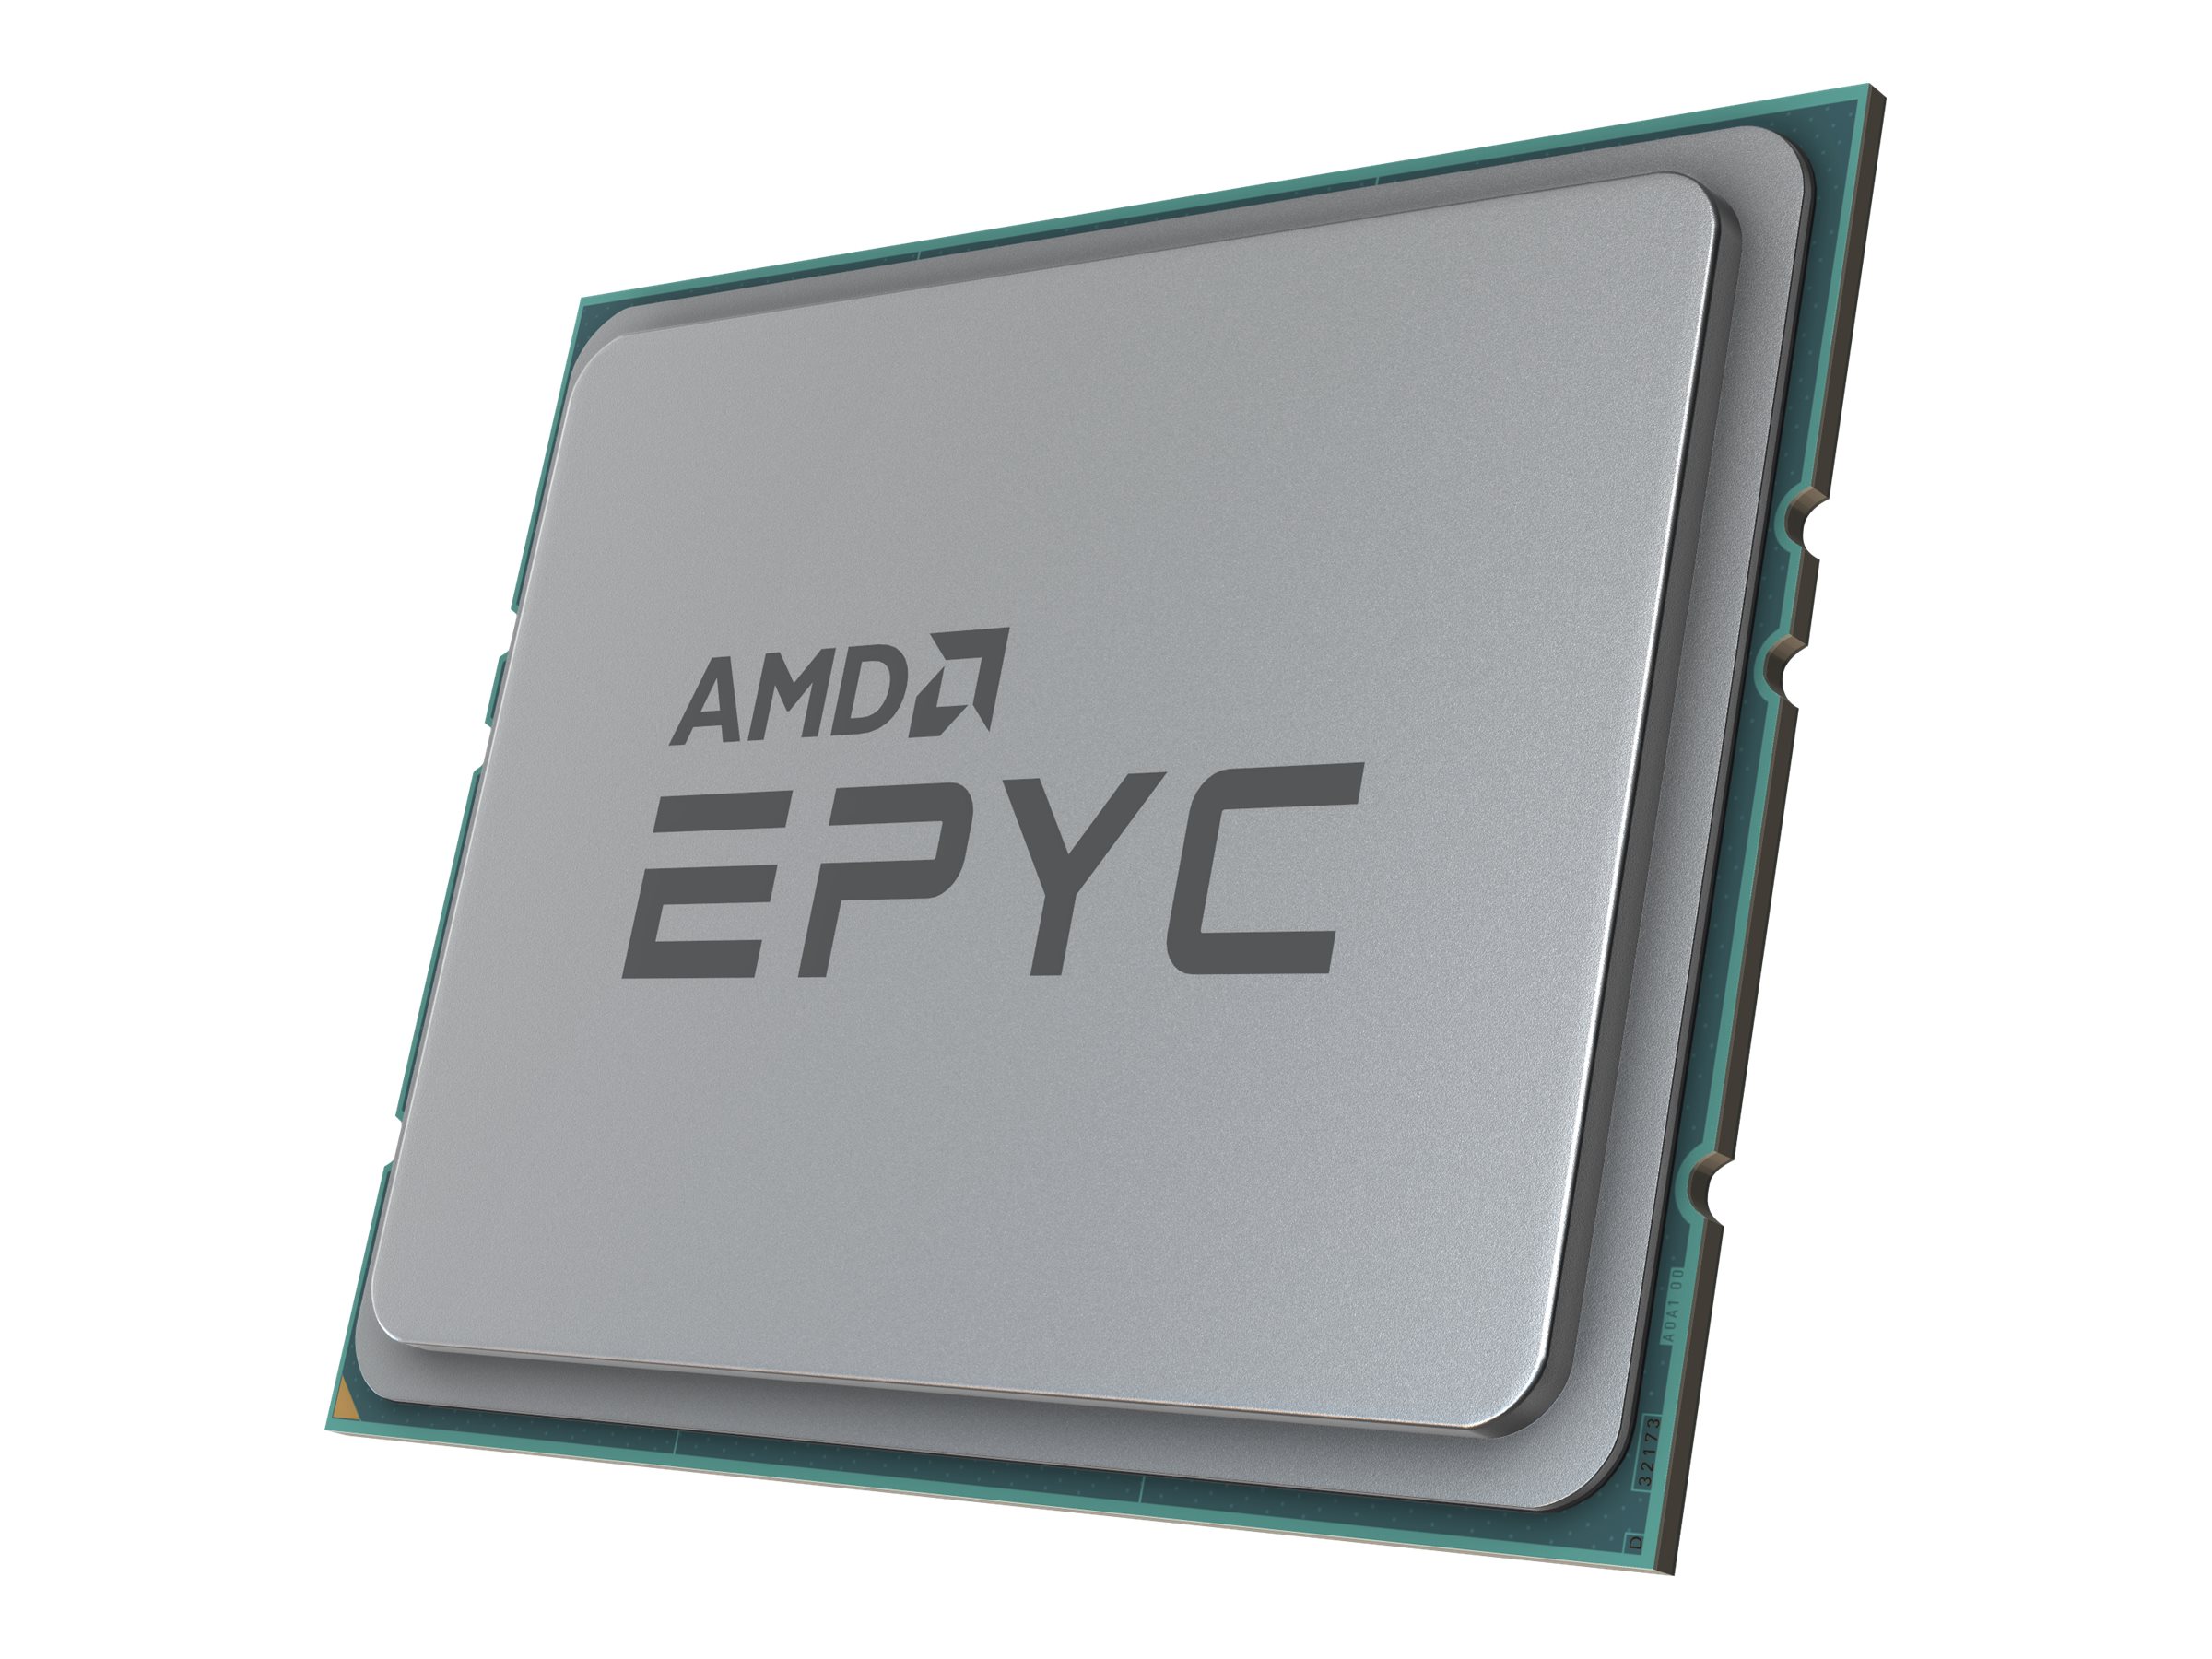 AMD EPYC 7351P - 2.4 GHz